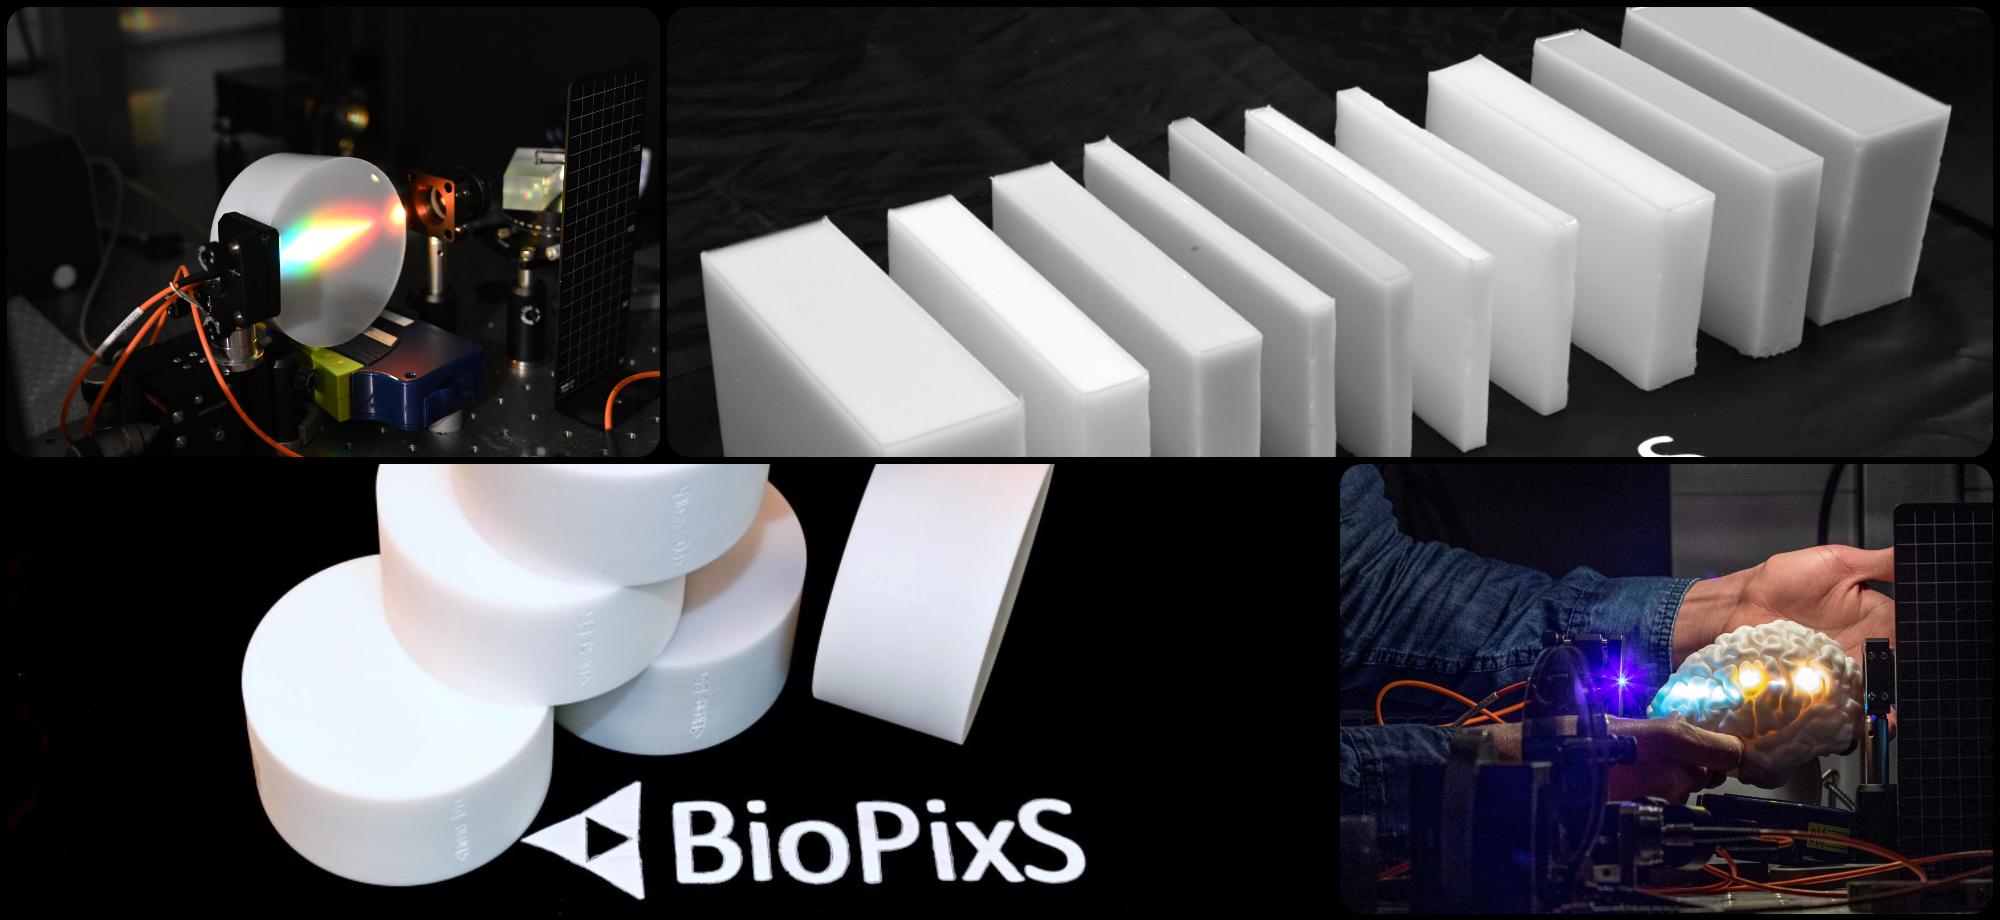 Product Products | Biophotonics optical phantoms - BioPixS image